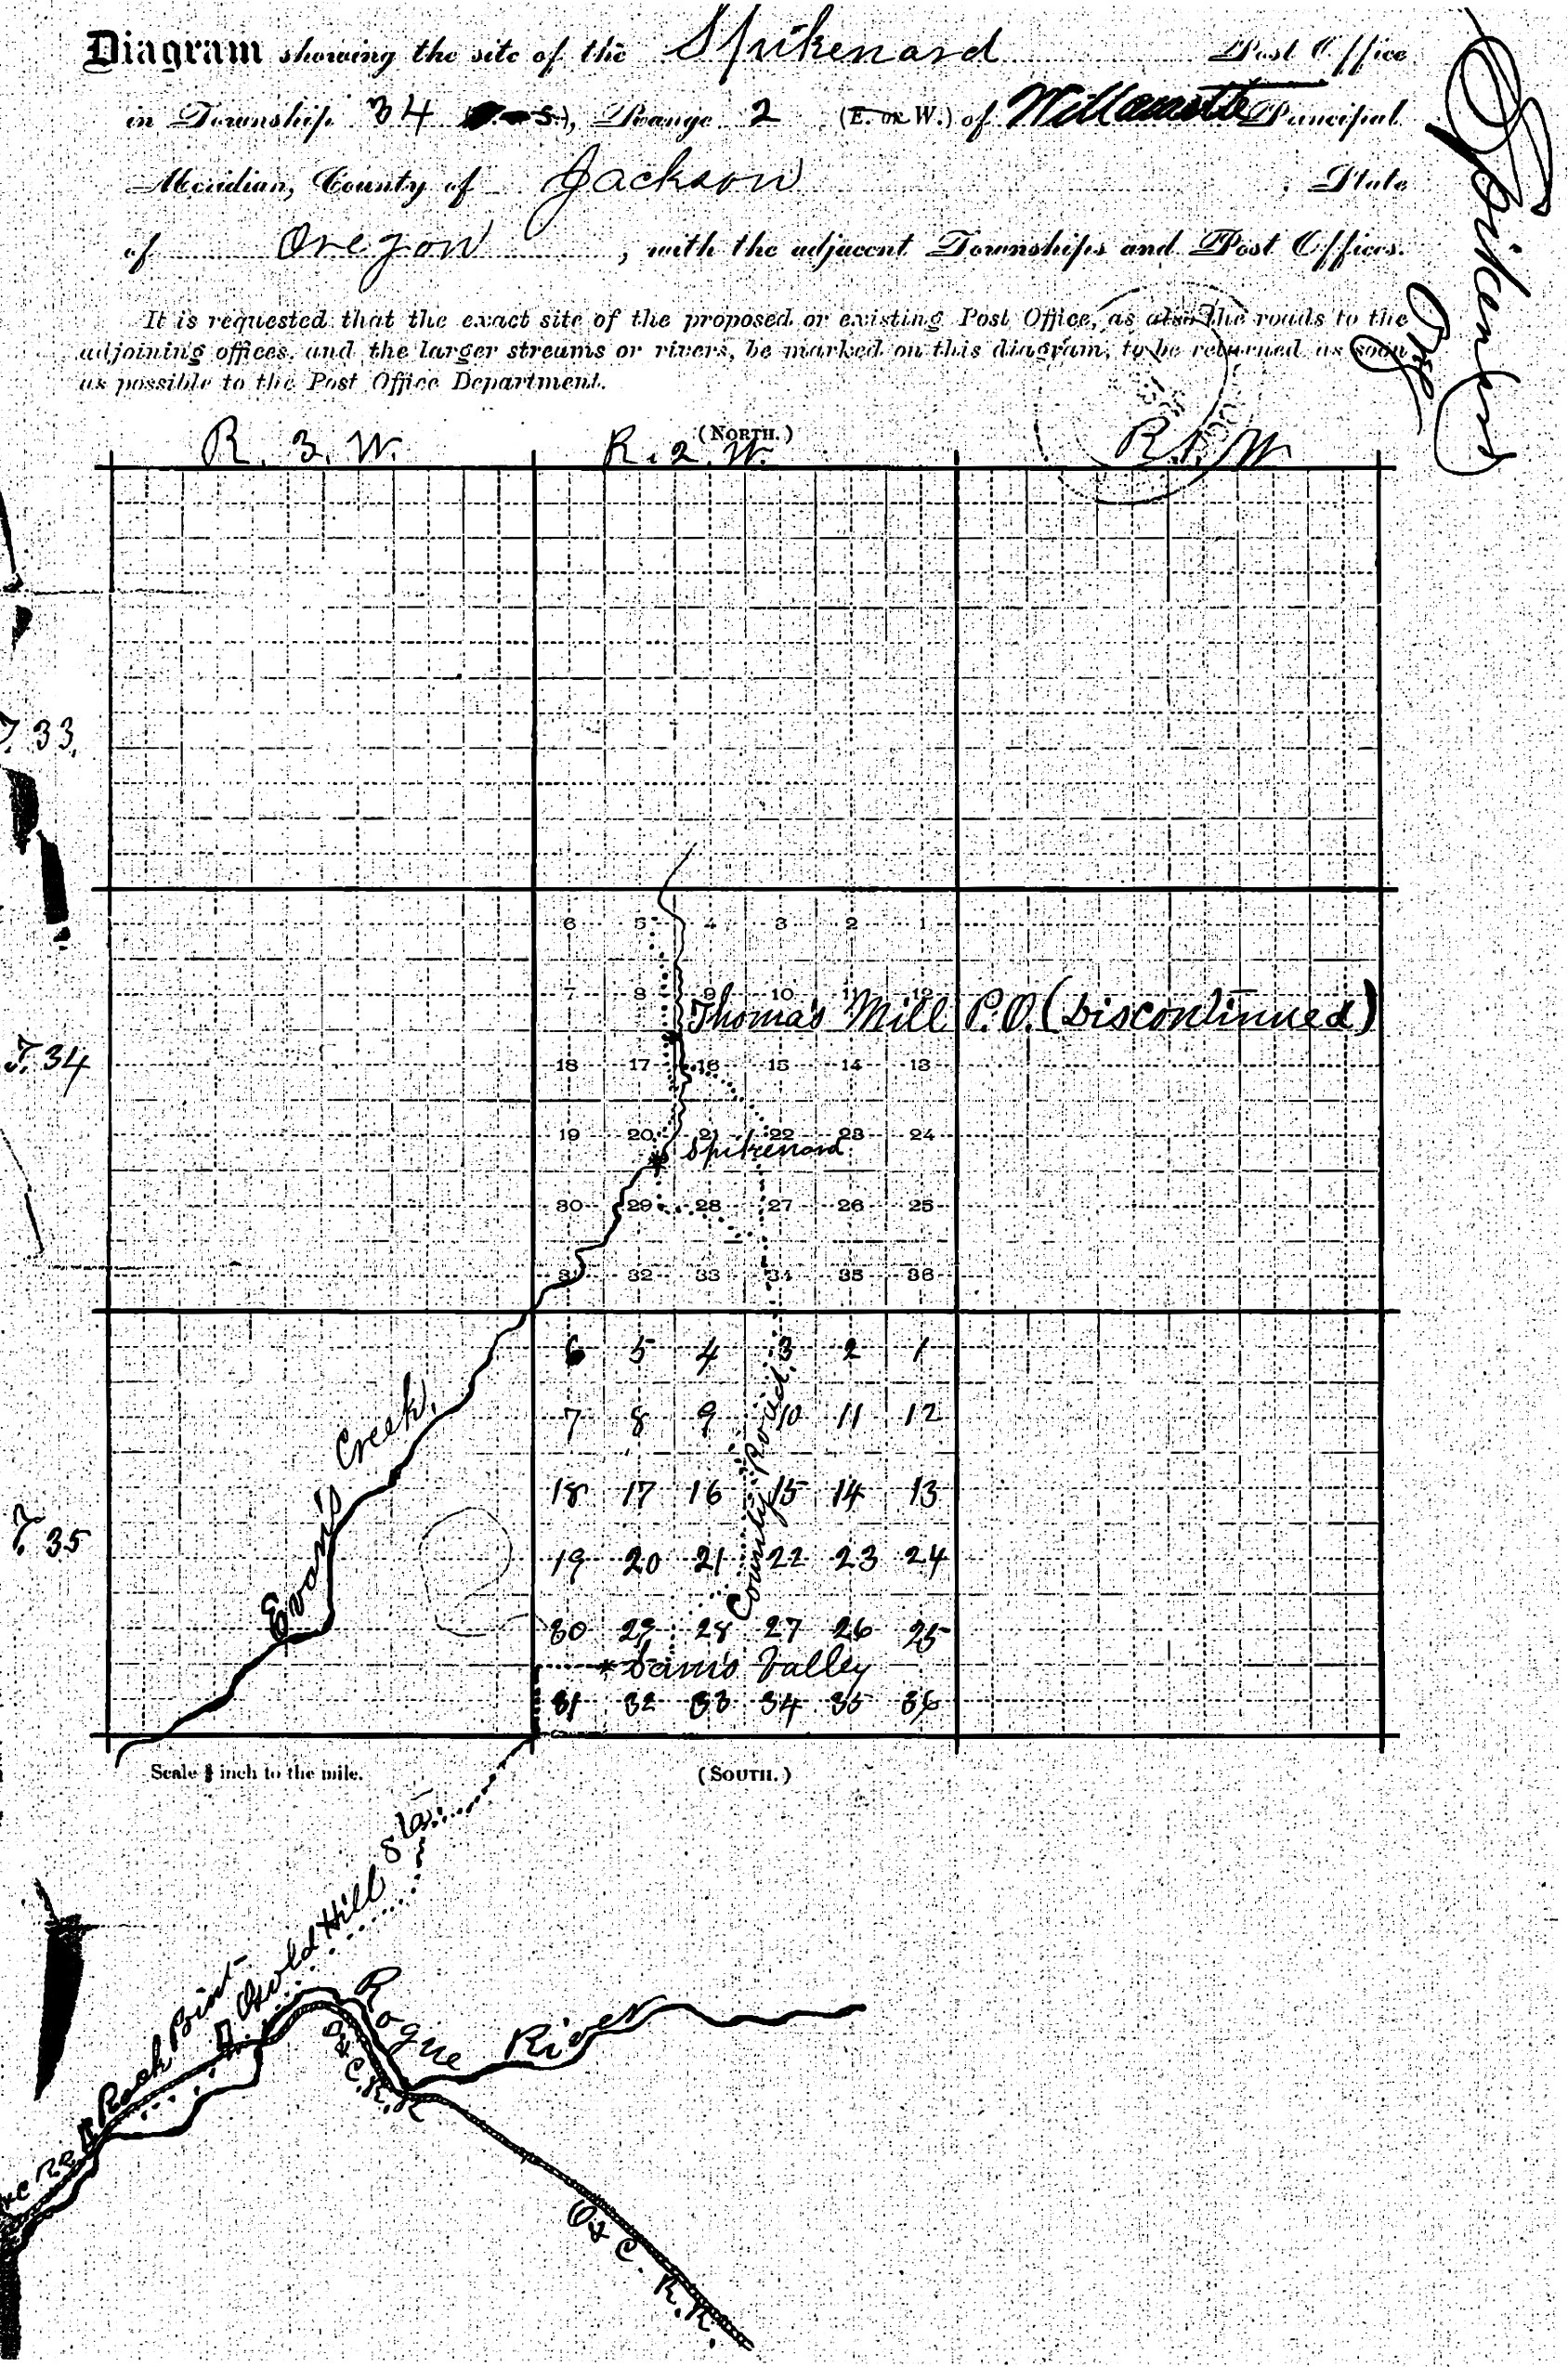 Spikenard, Oregon post office application, April 28, 1884